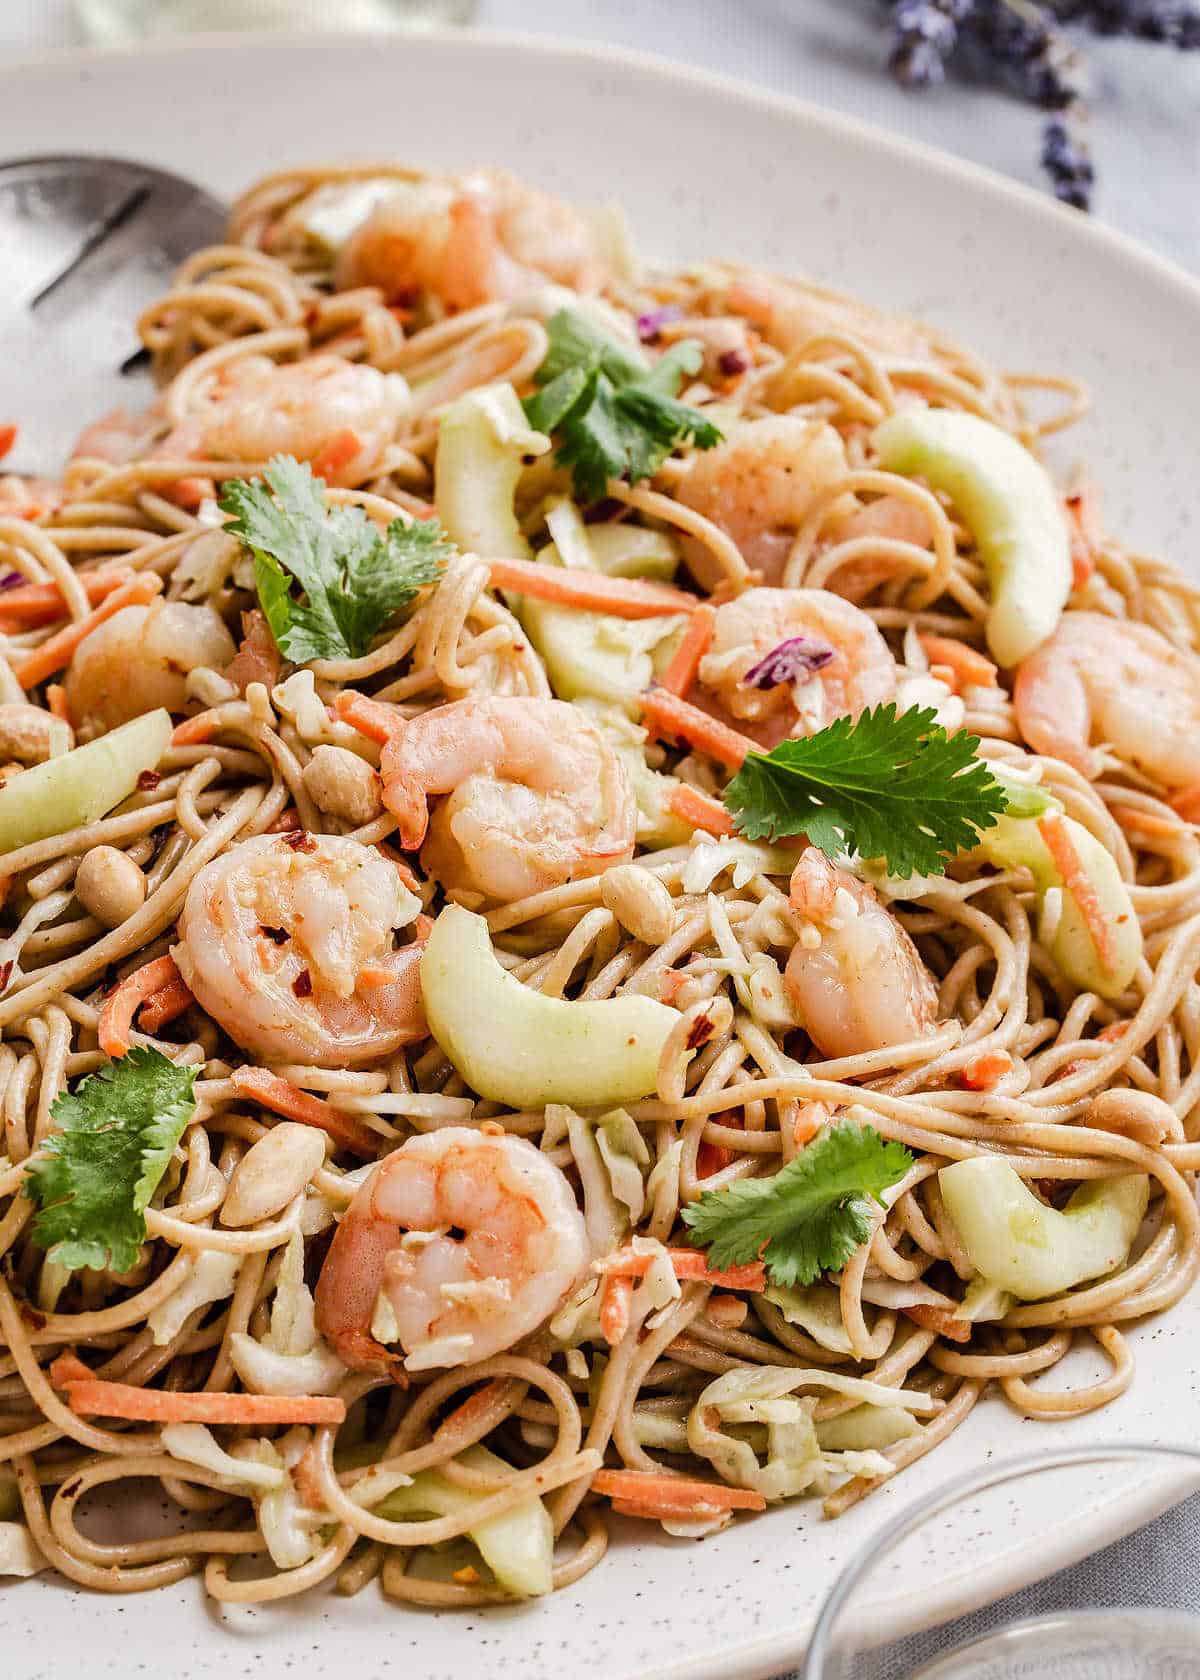 cold spaghetti pasta salad with shrimp on white platter.